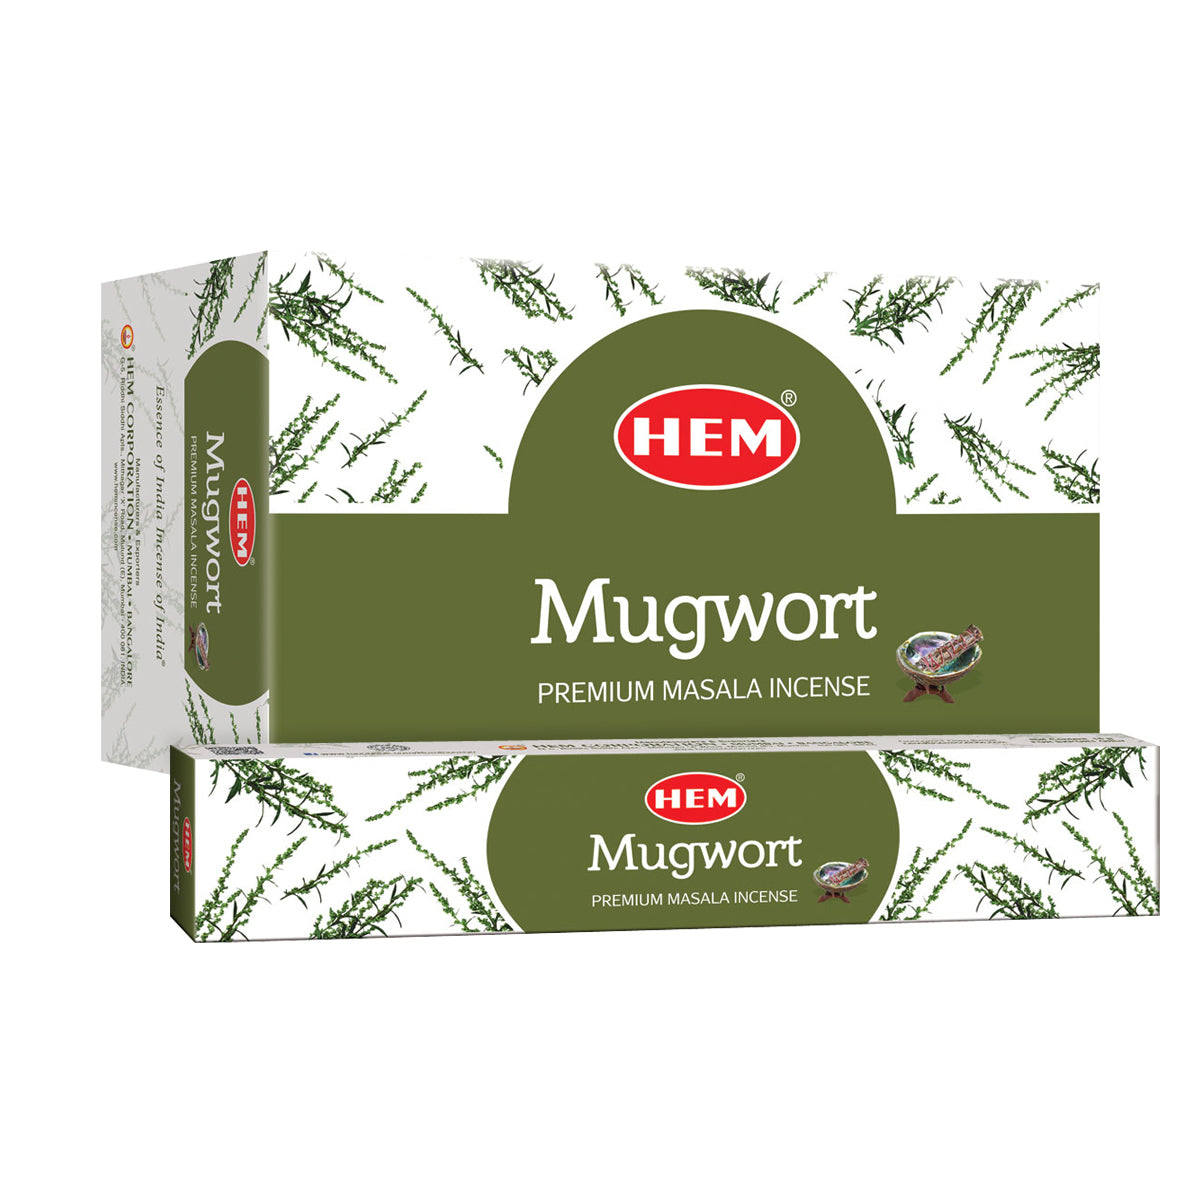 hem-mugwort-premium-masala-incense-sticks